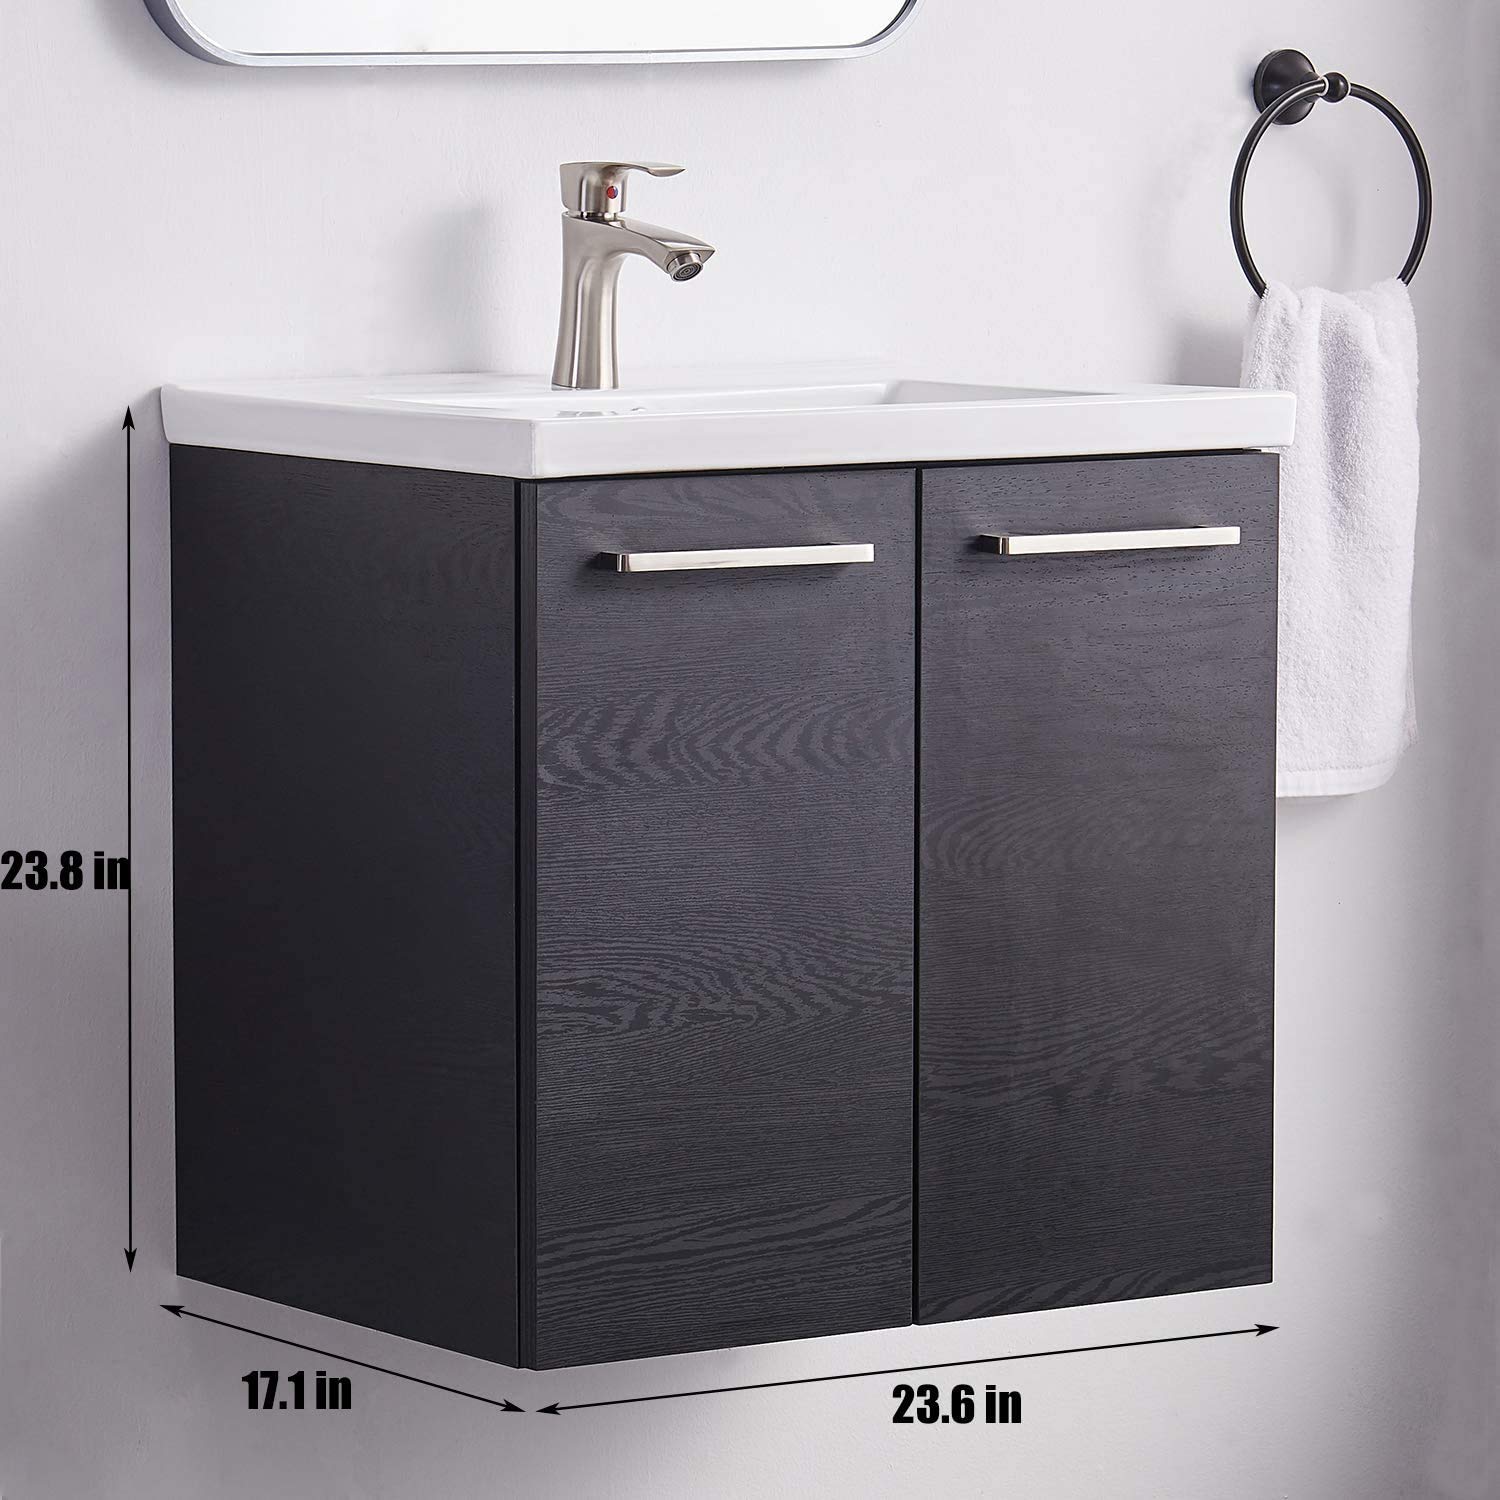 LOCLGPM Modern 24” Black Wood Grain Wall-Mounted Floating Small Bathroom Vanity, Simple Design 2-Door Bathroom Sink Cabinet Vanities Combo Set with White Ceramic Countertop Vessel Sink